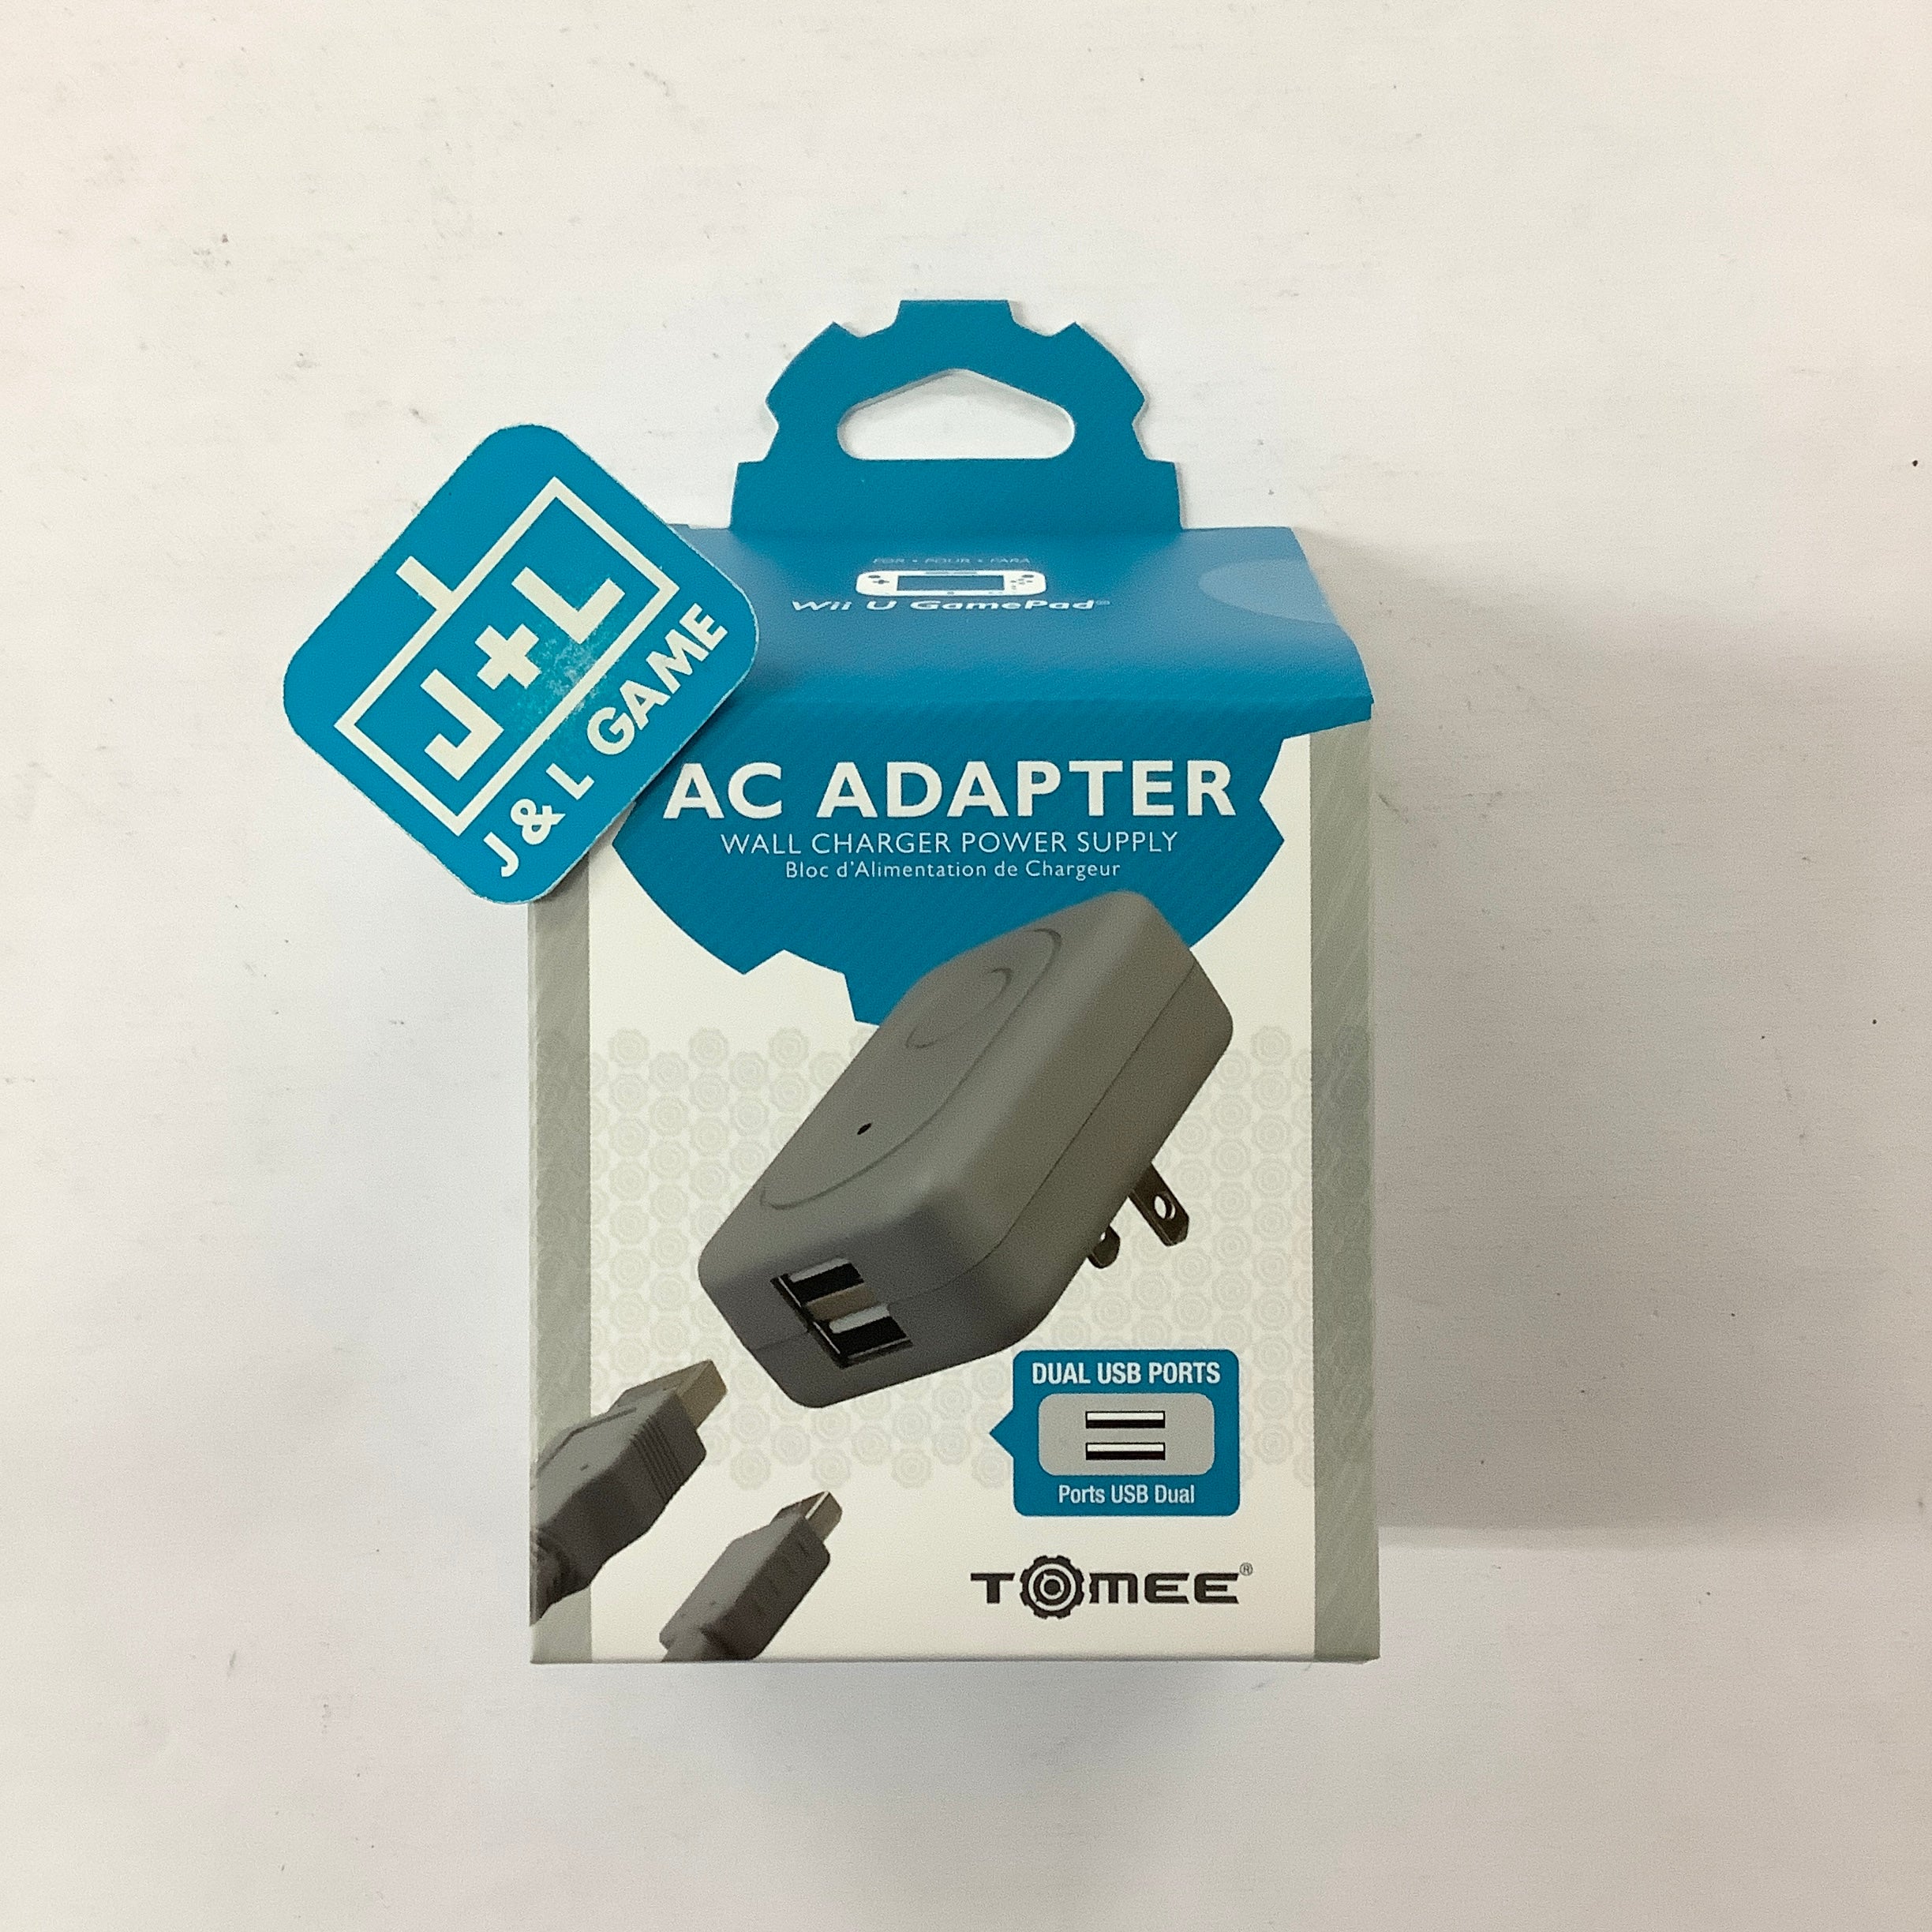 Tomee AC Adapter for Wii U GamePad - Nintendo Wii U Accessories Tomee   